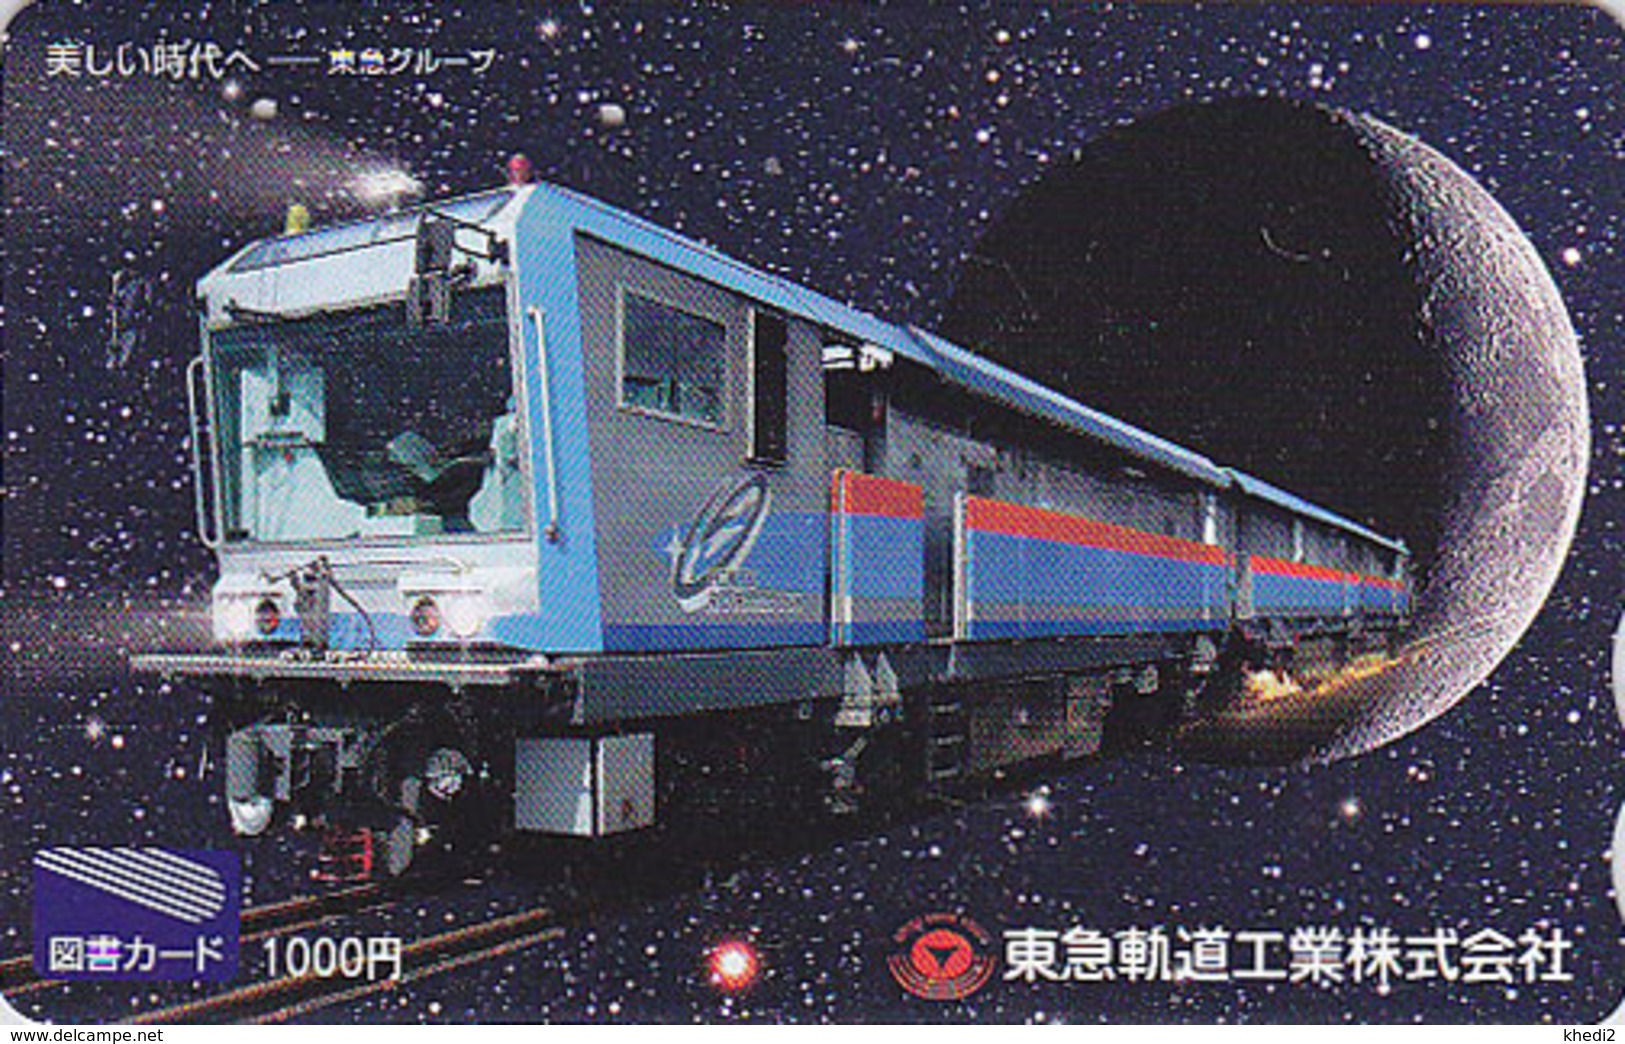 Carte Prépayée Japon - TRAIN & Globe Lune - ZUG Eisenbahn TREIN - Railway Japan Prepaid Tosho Card - 3289 - Trains